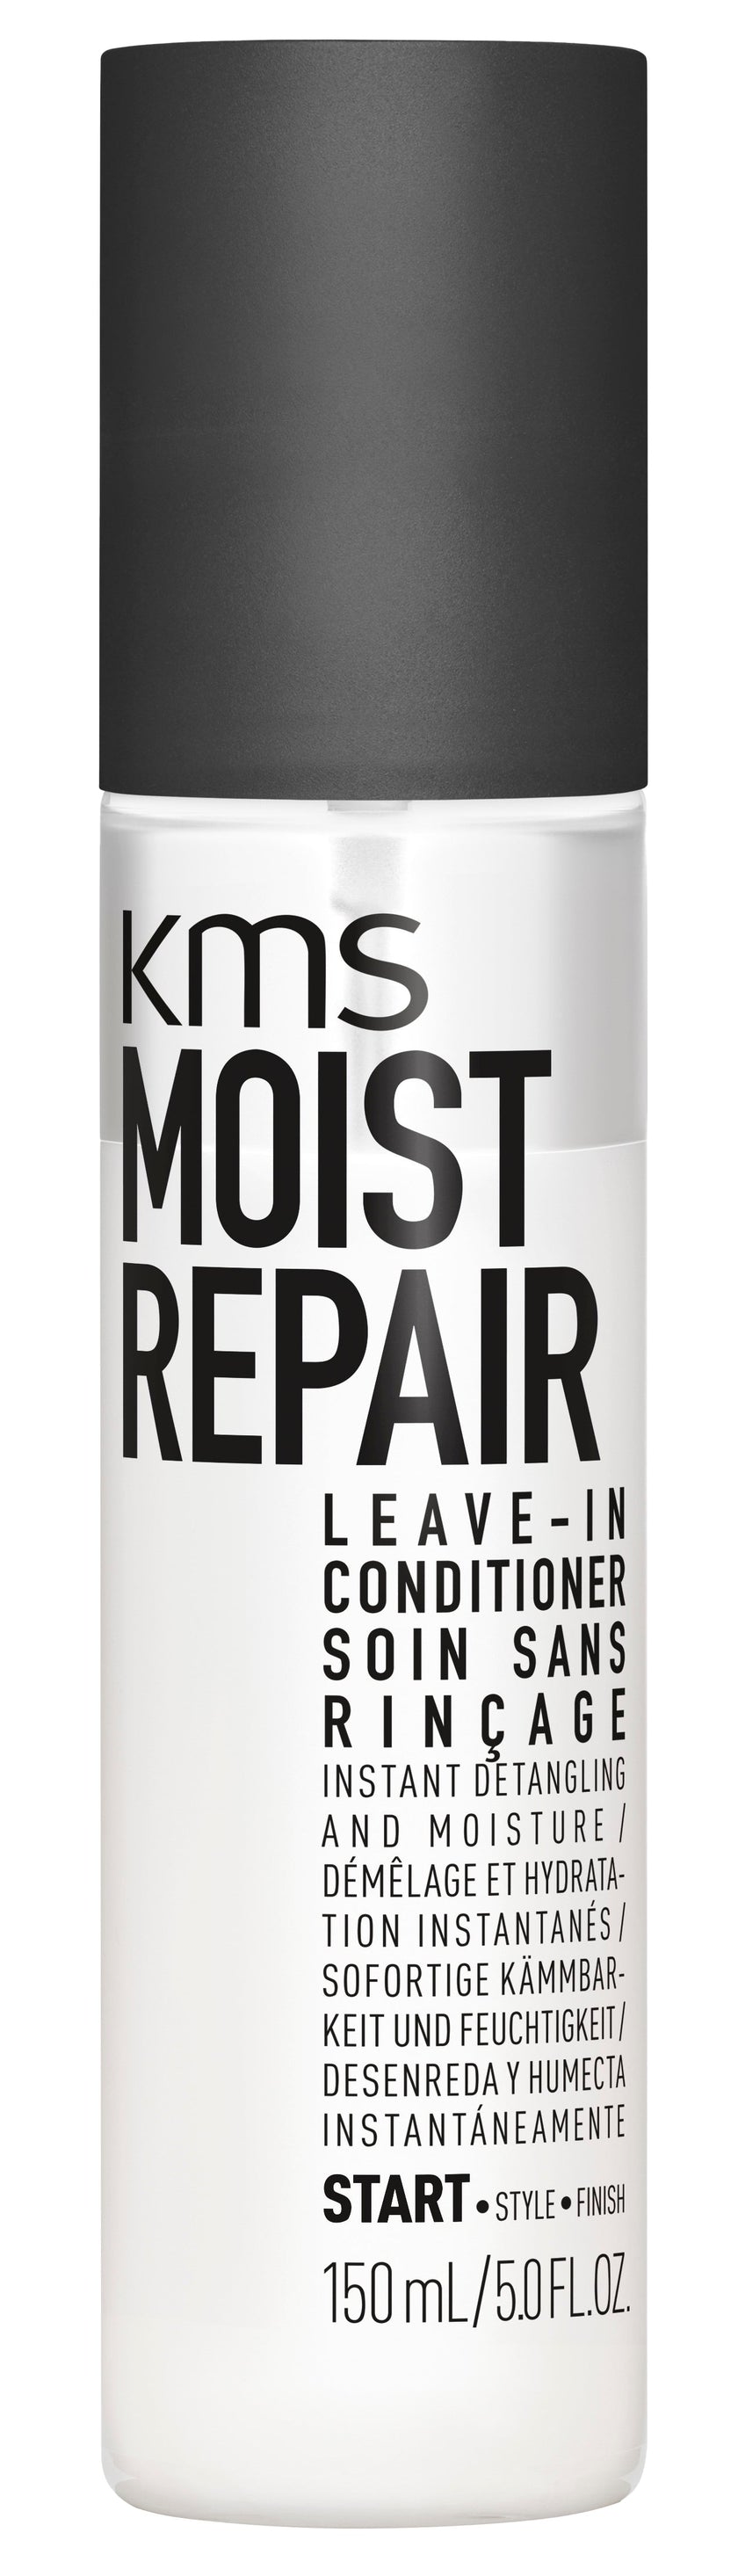 MoistRepair Leave-In Conditioner Image